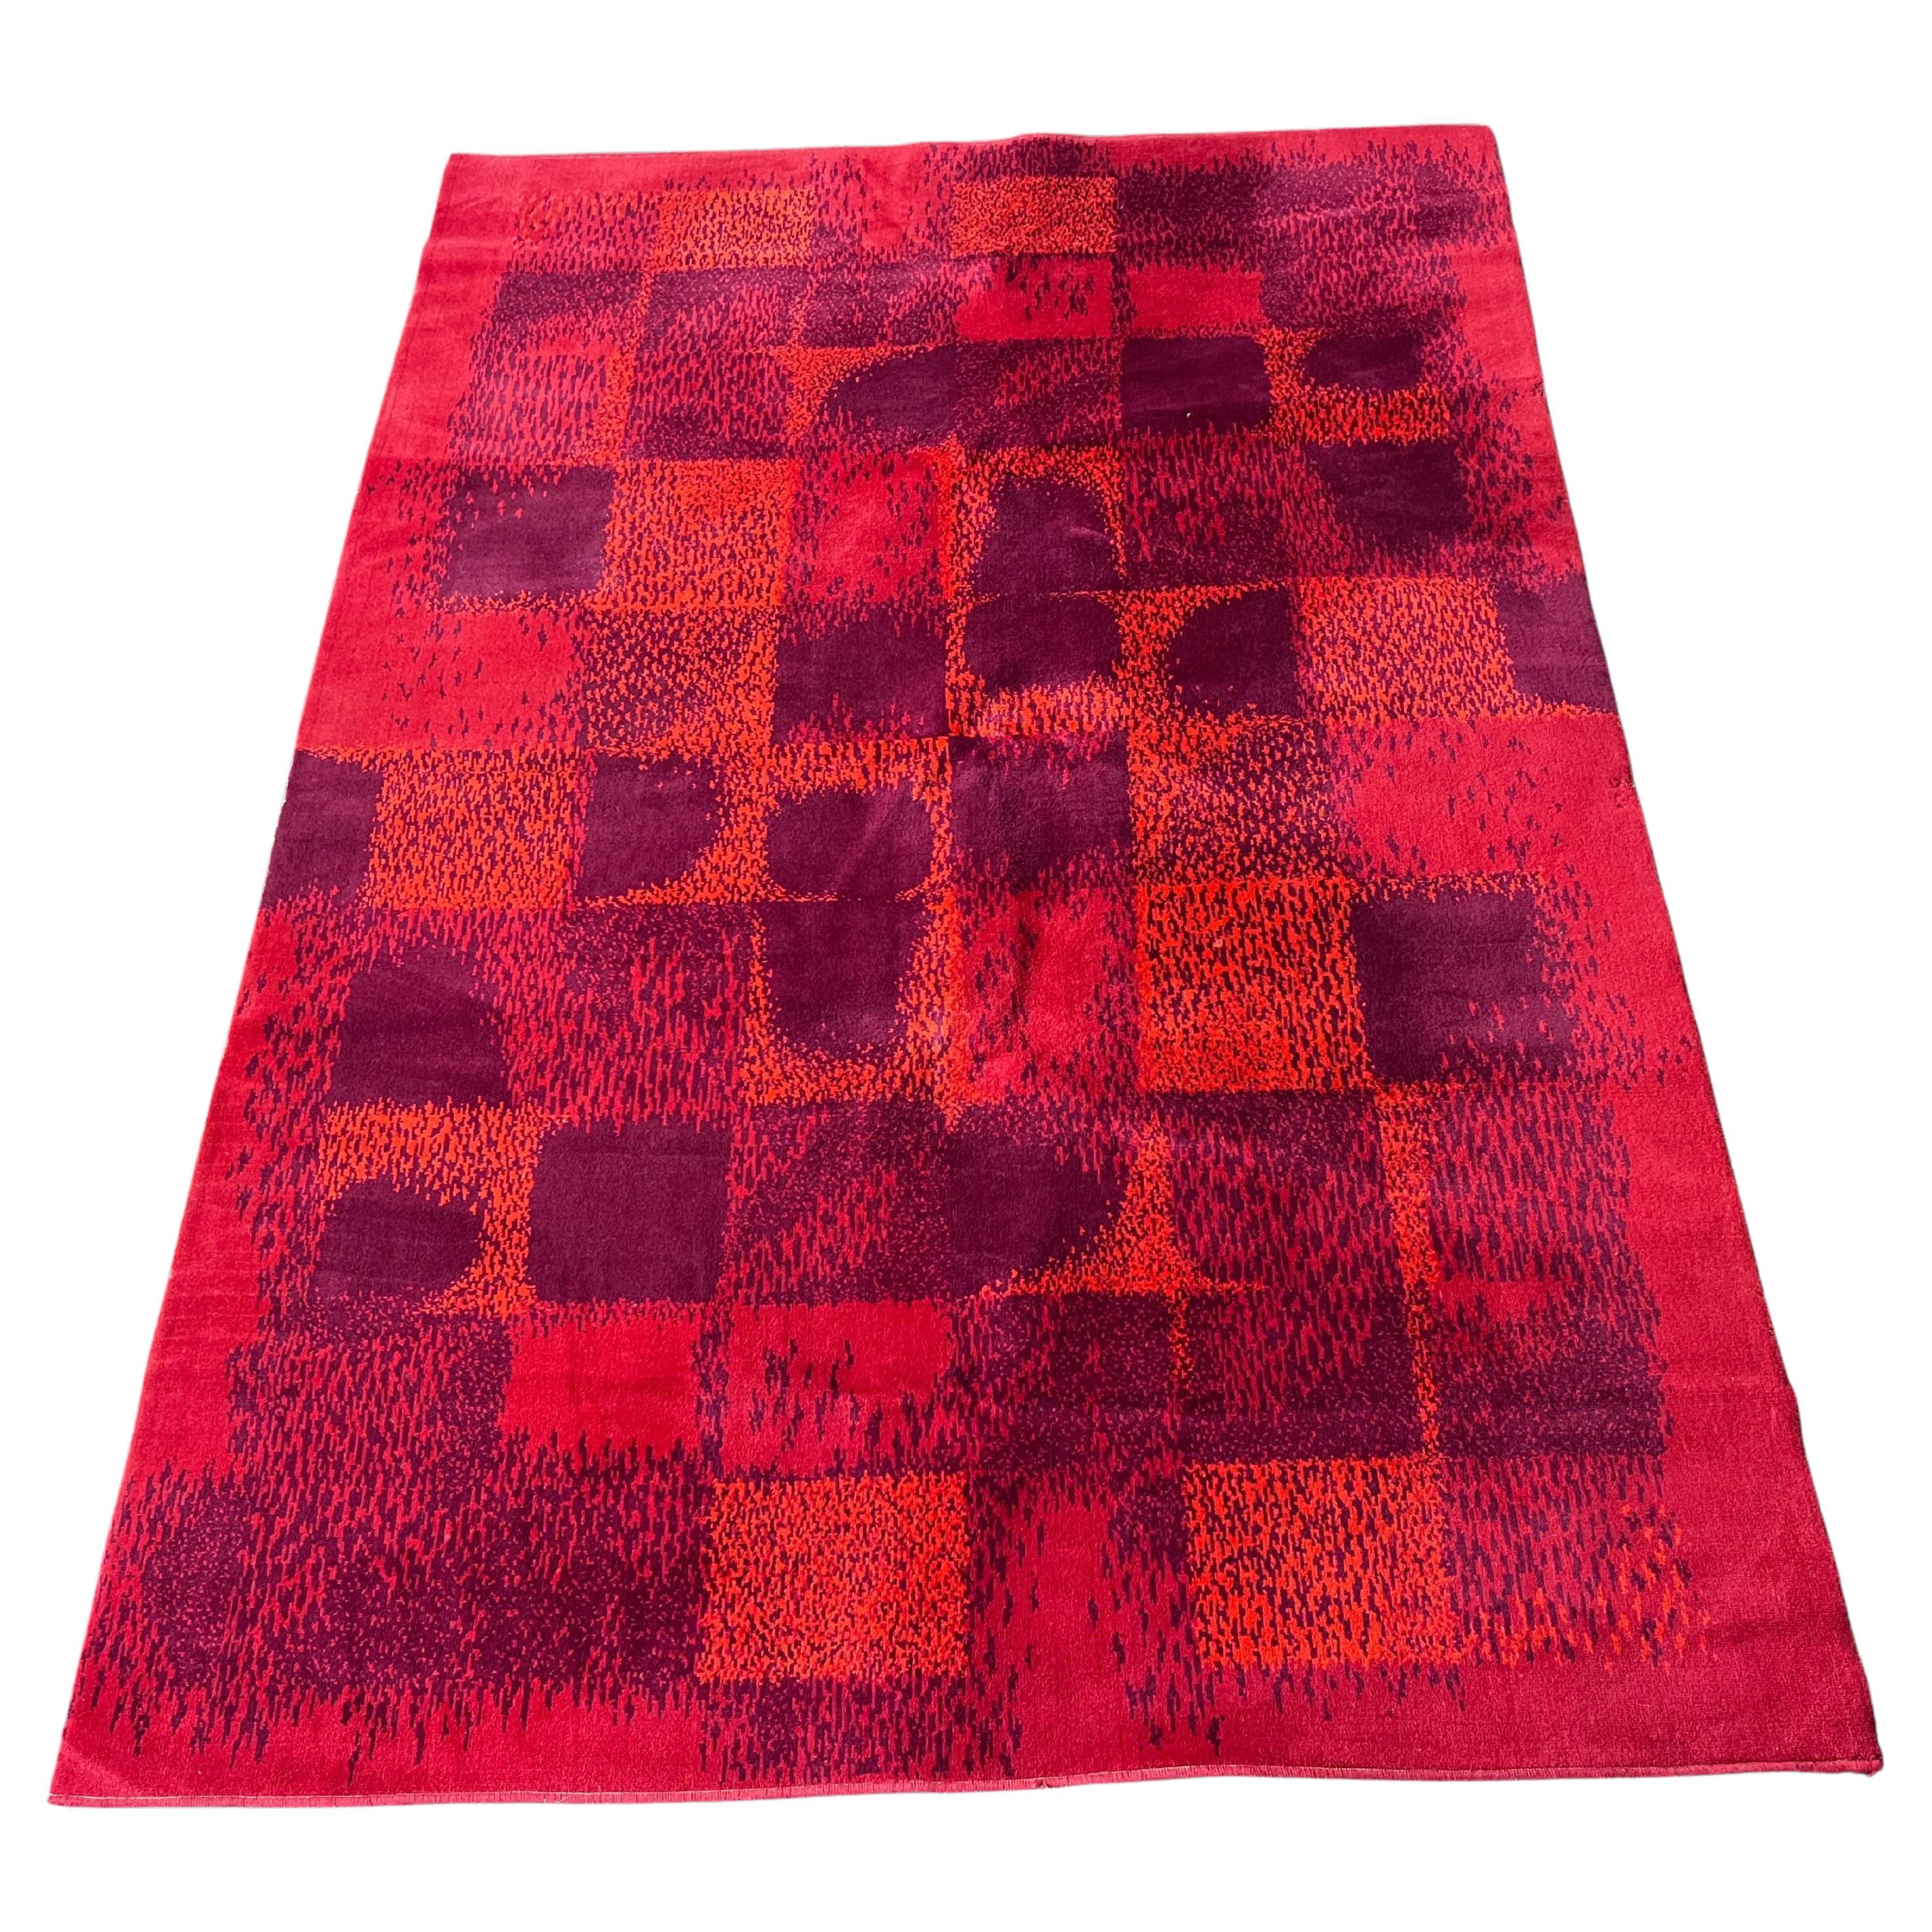 Midcentury Abstract Design Geometric Rug / Carpet, 1970s / Czechoslovakia For Sale